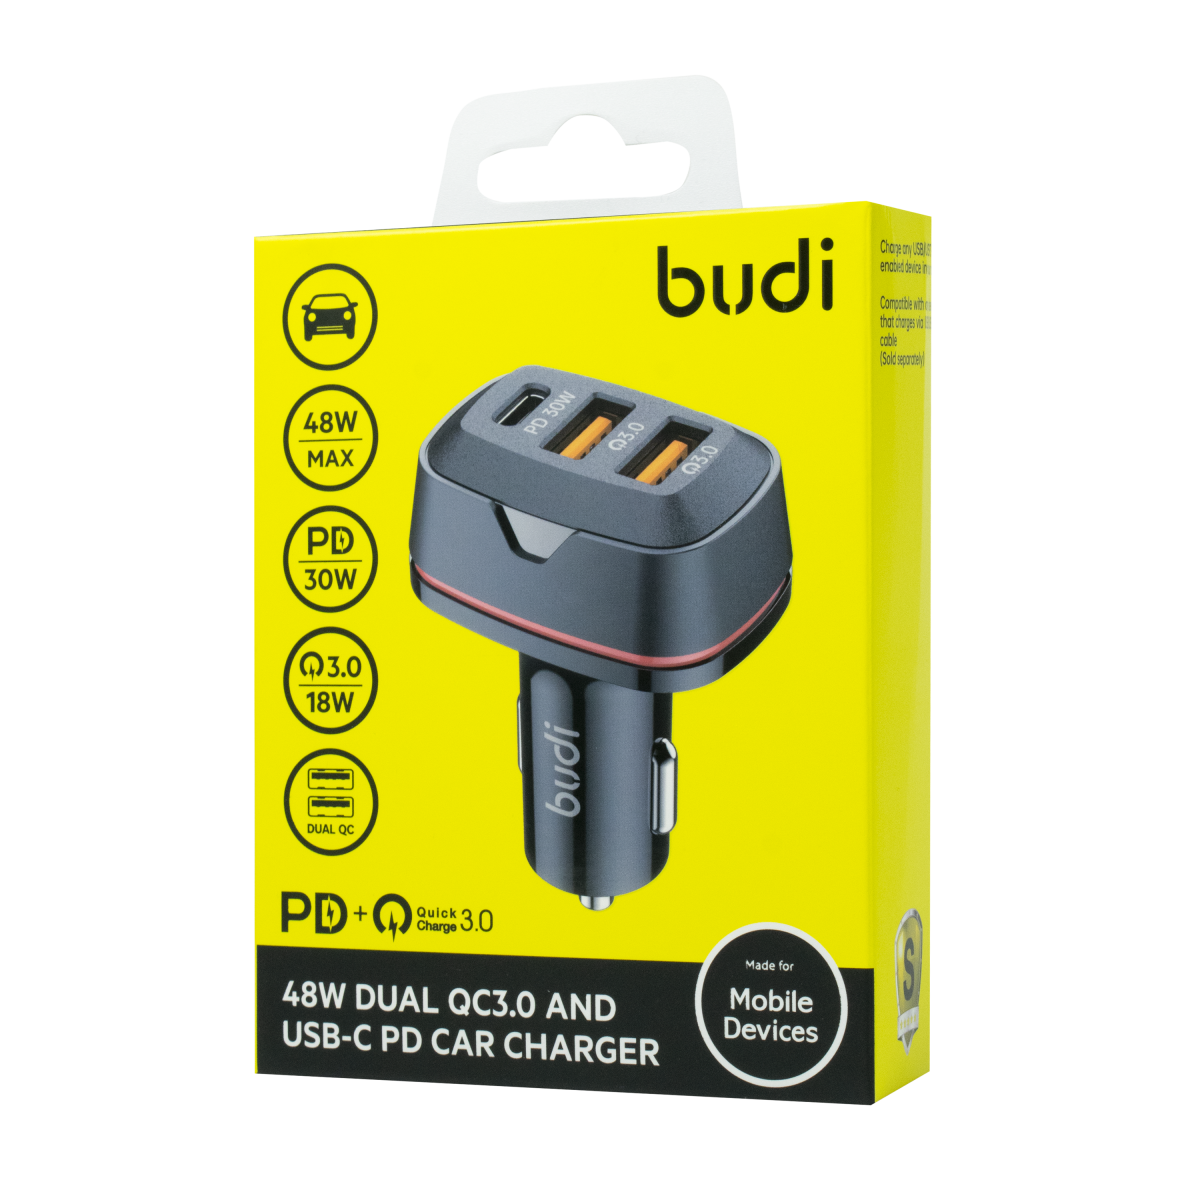 CC616TB - Budi Car Charger 48W Dual QC3.0 and USB-C PD